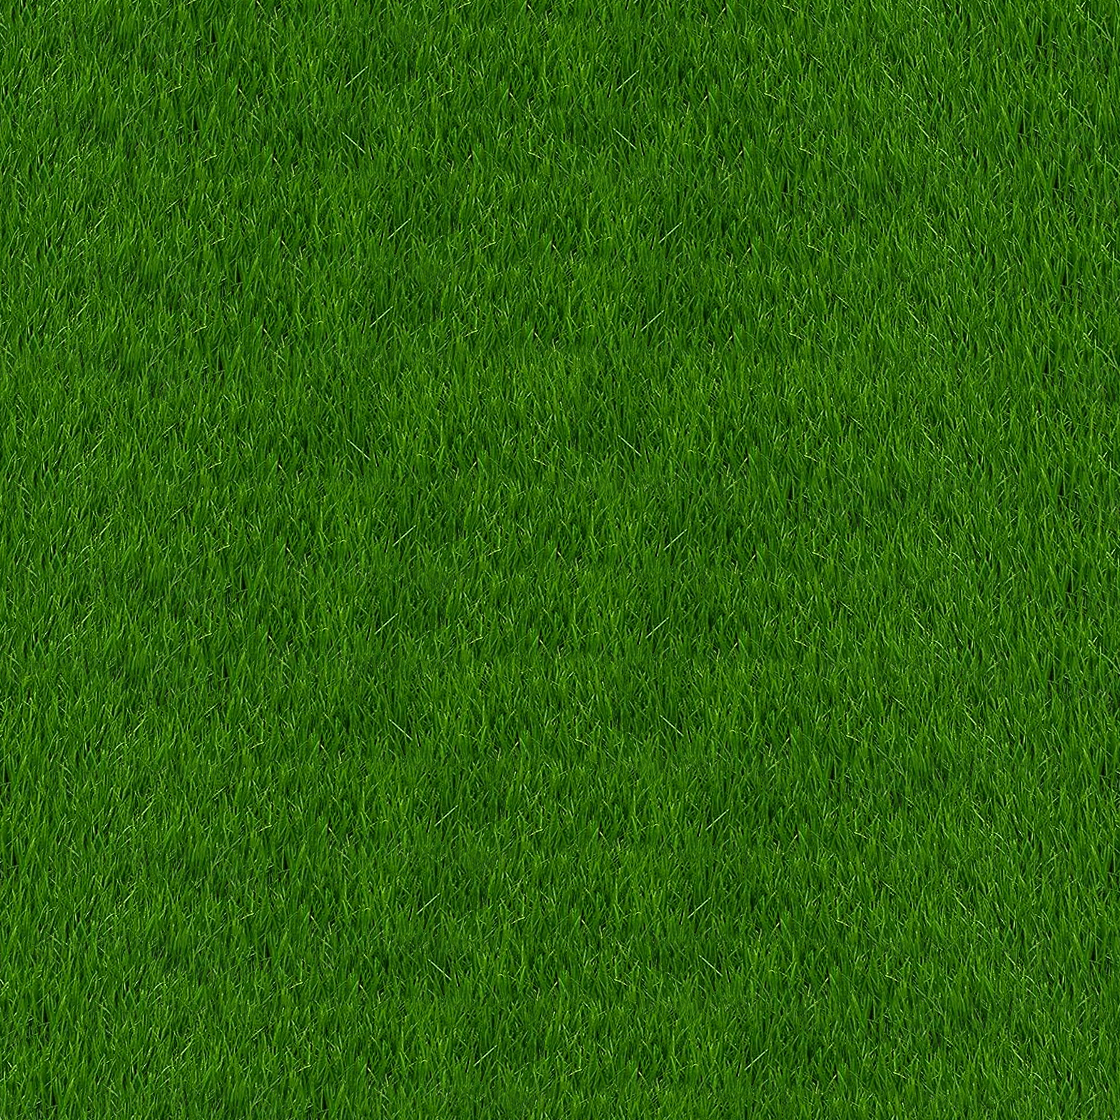 Grass texture free image